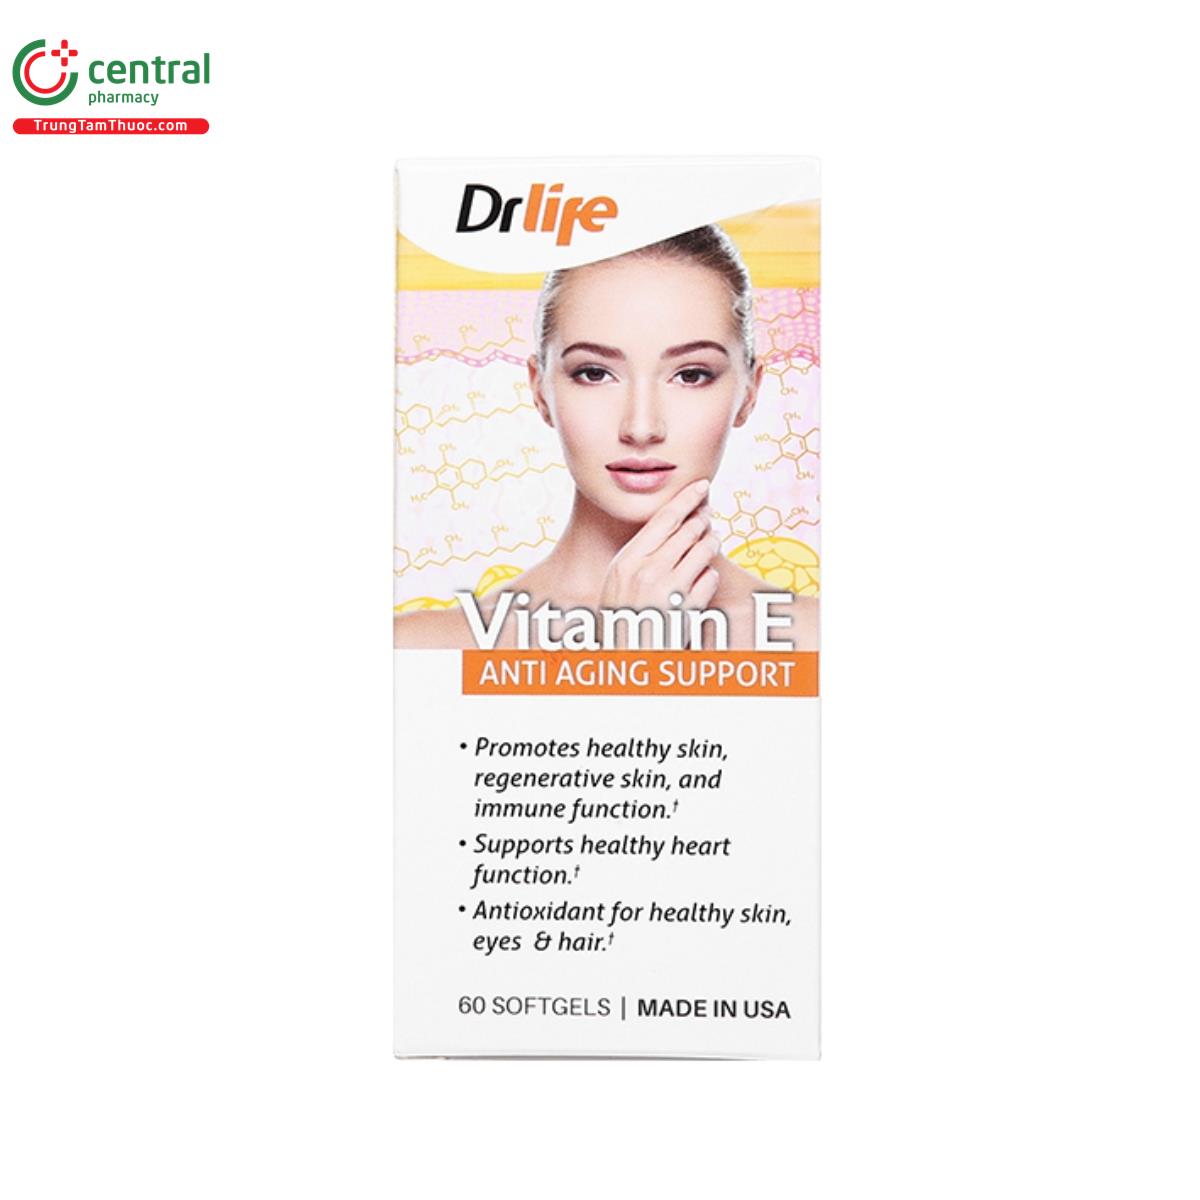 drlife vitamin e 4 L4877